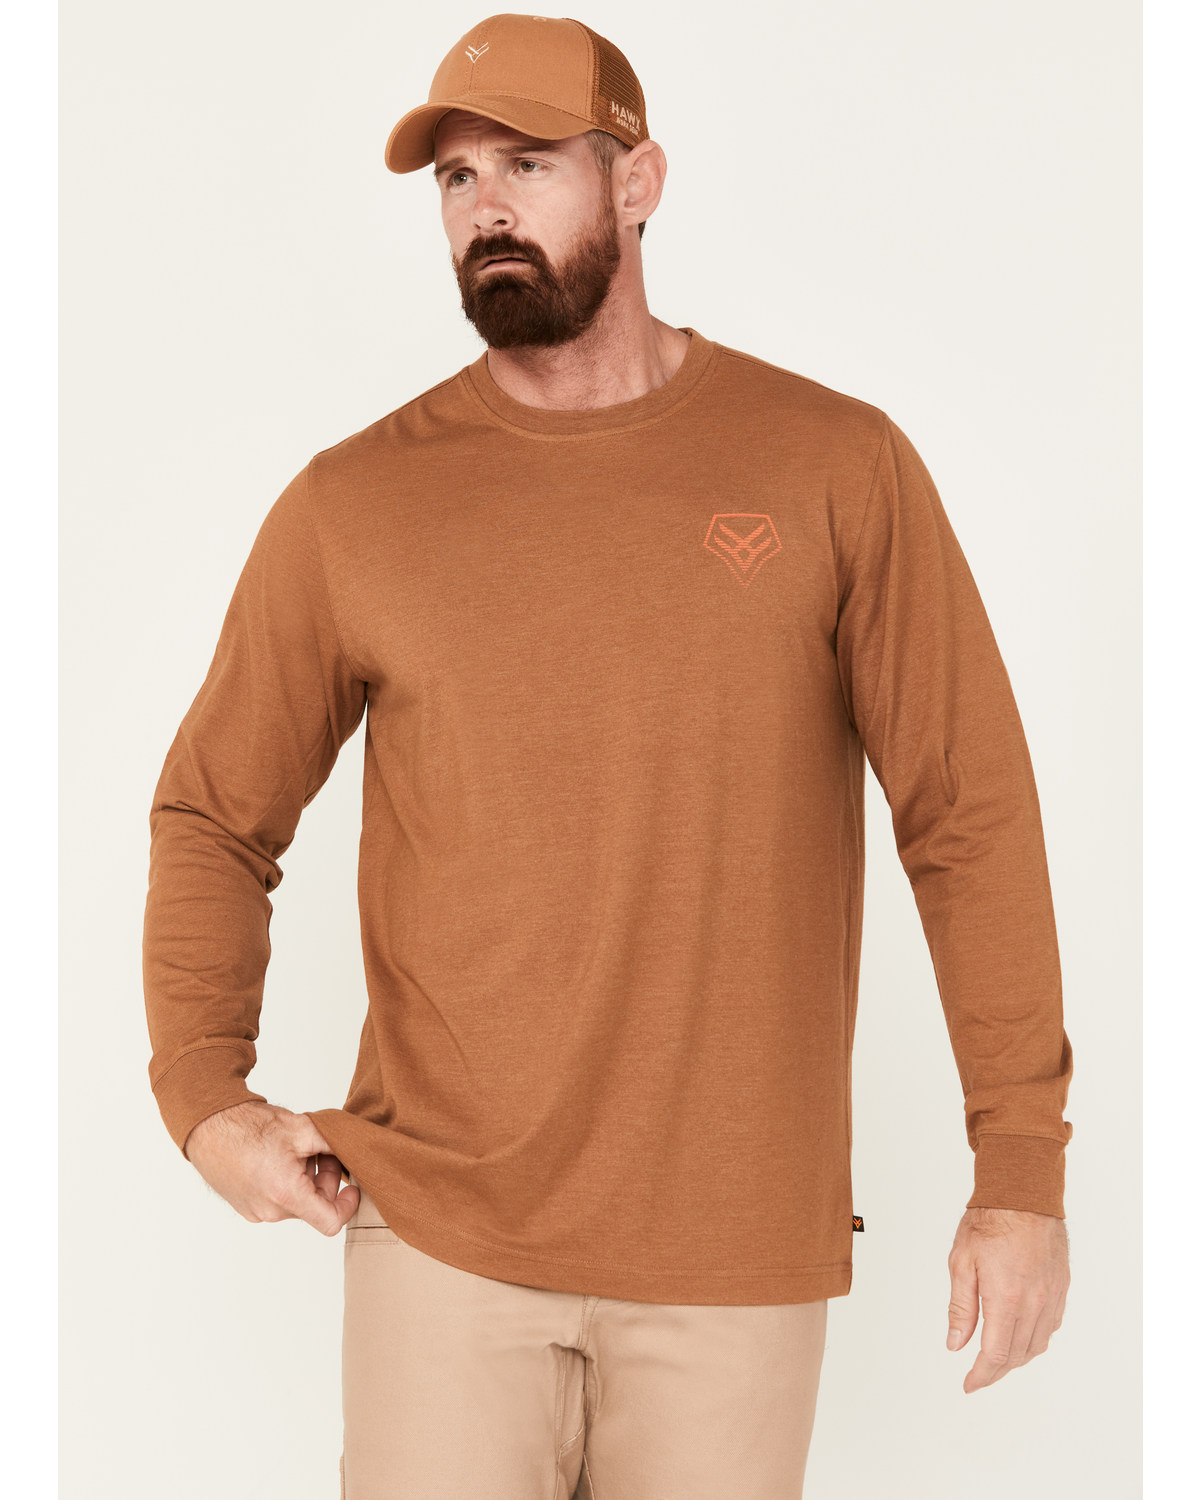 Hawx Men's Ombre Long Sleeve Graphic Work T-Shirt